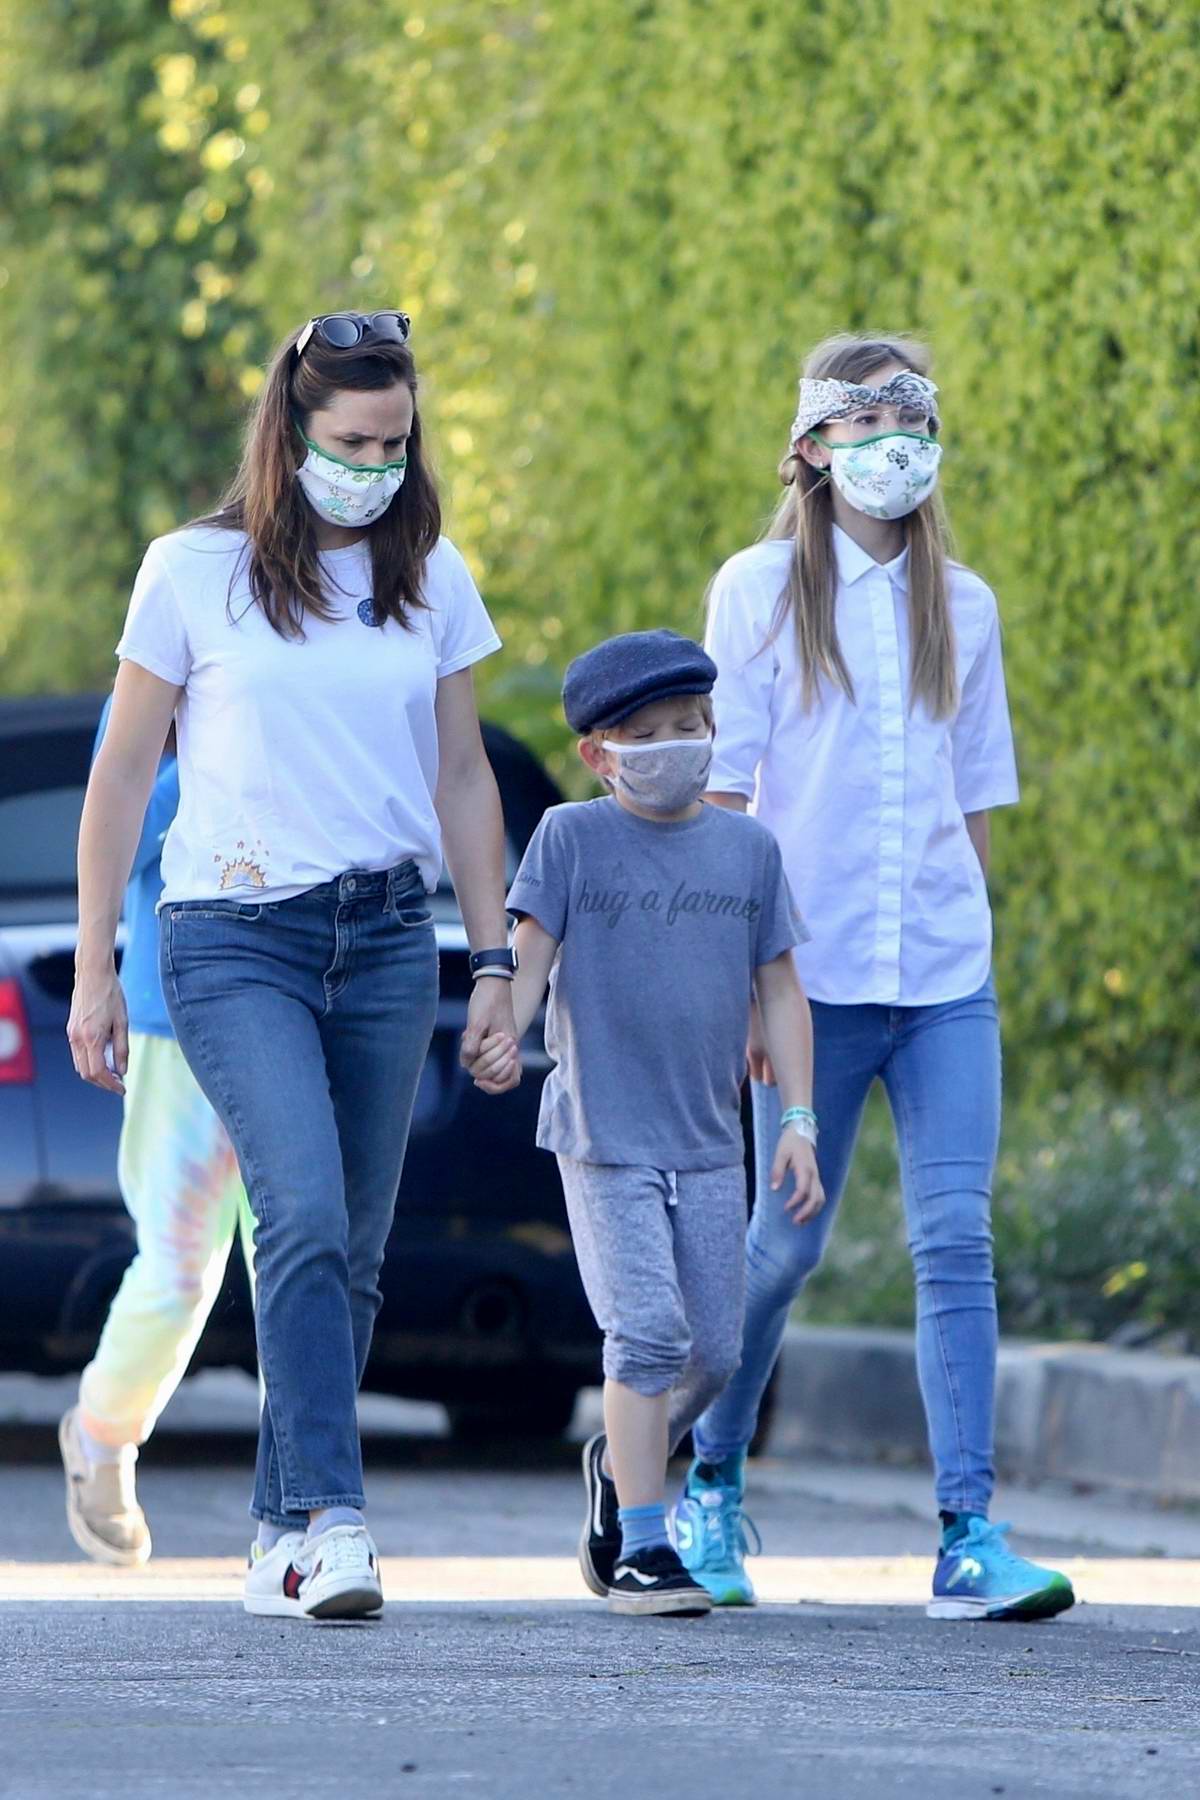 Jennifer Garner and her kids seen wearing masks while enjoying a hike